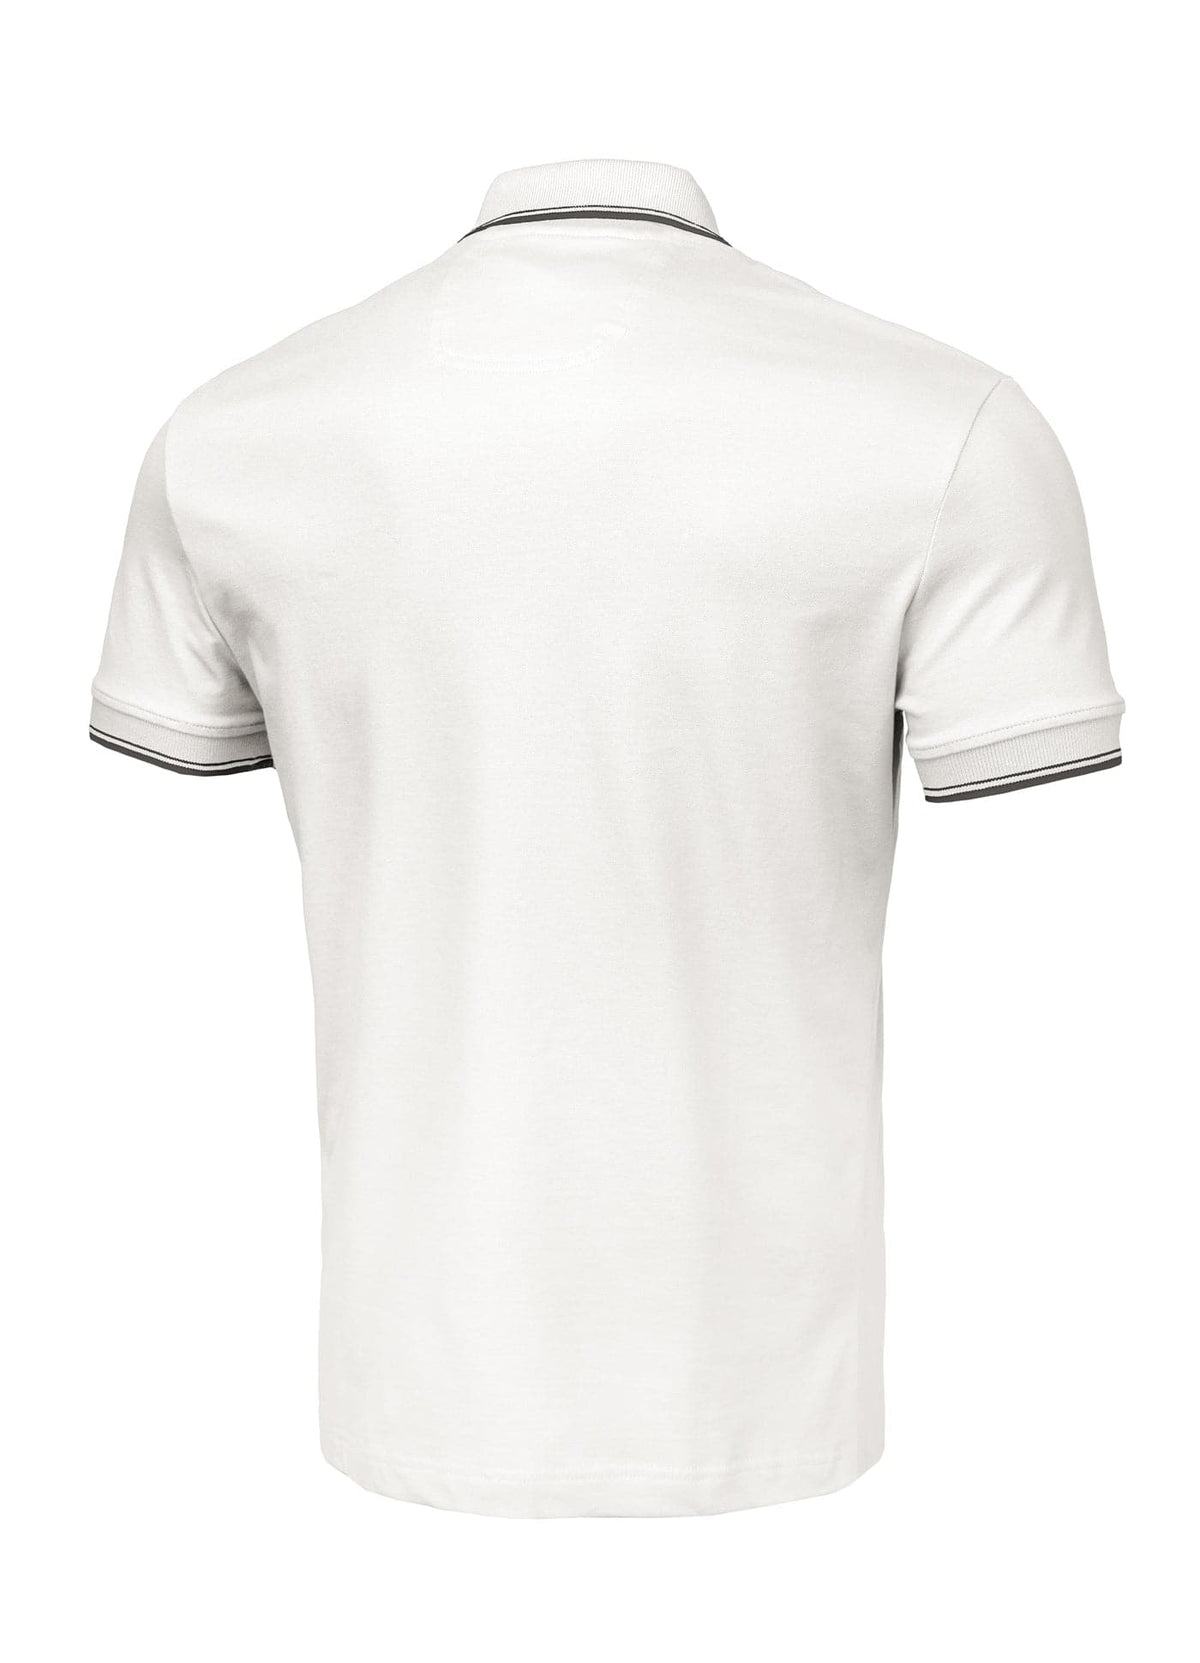 PIQUE STRIPES REGULAR Off White Polo T-shirt